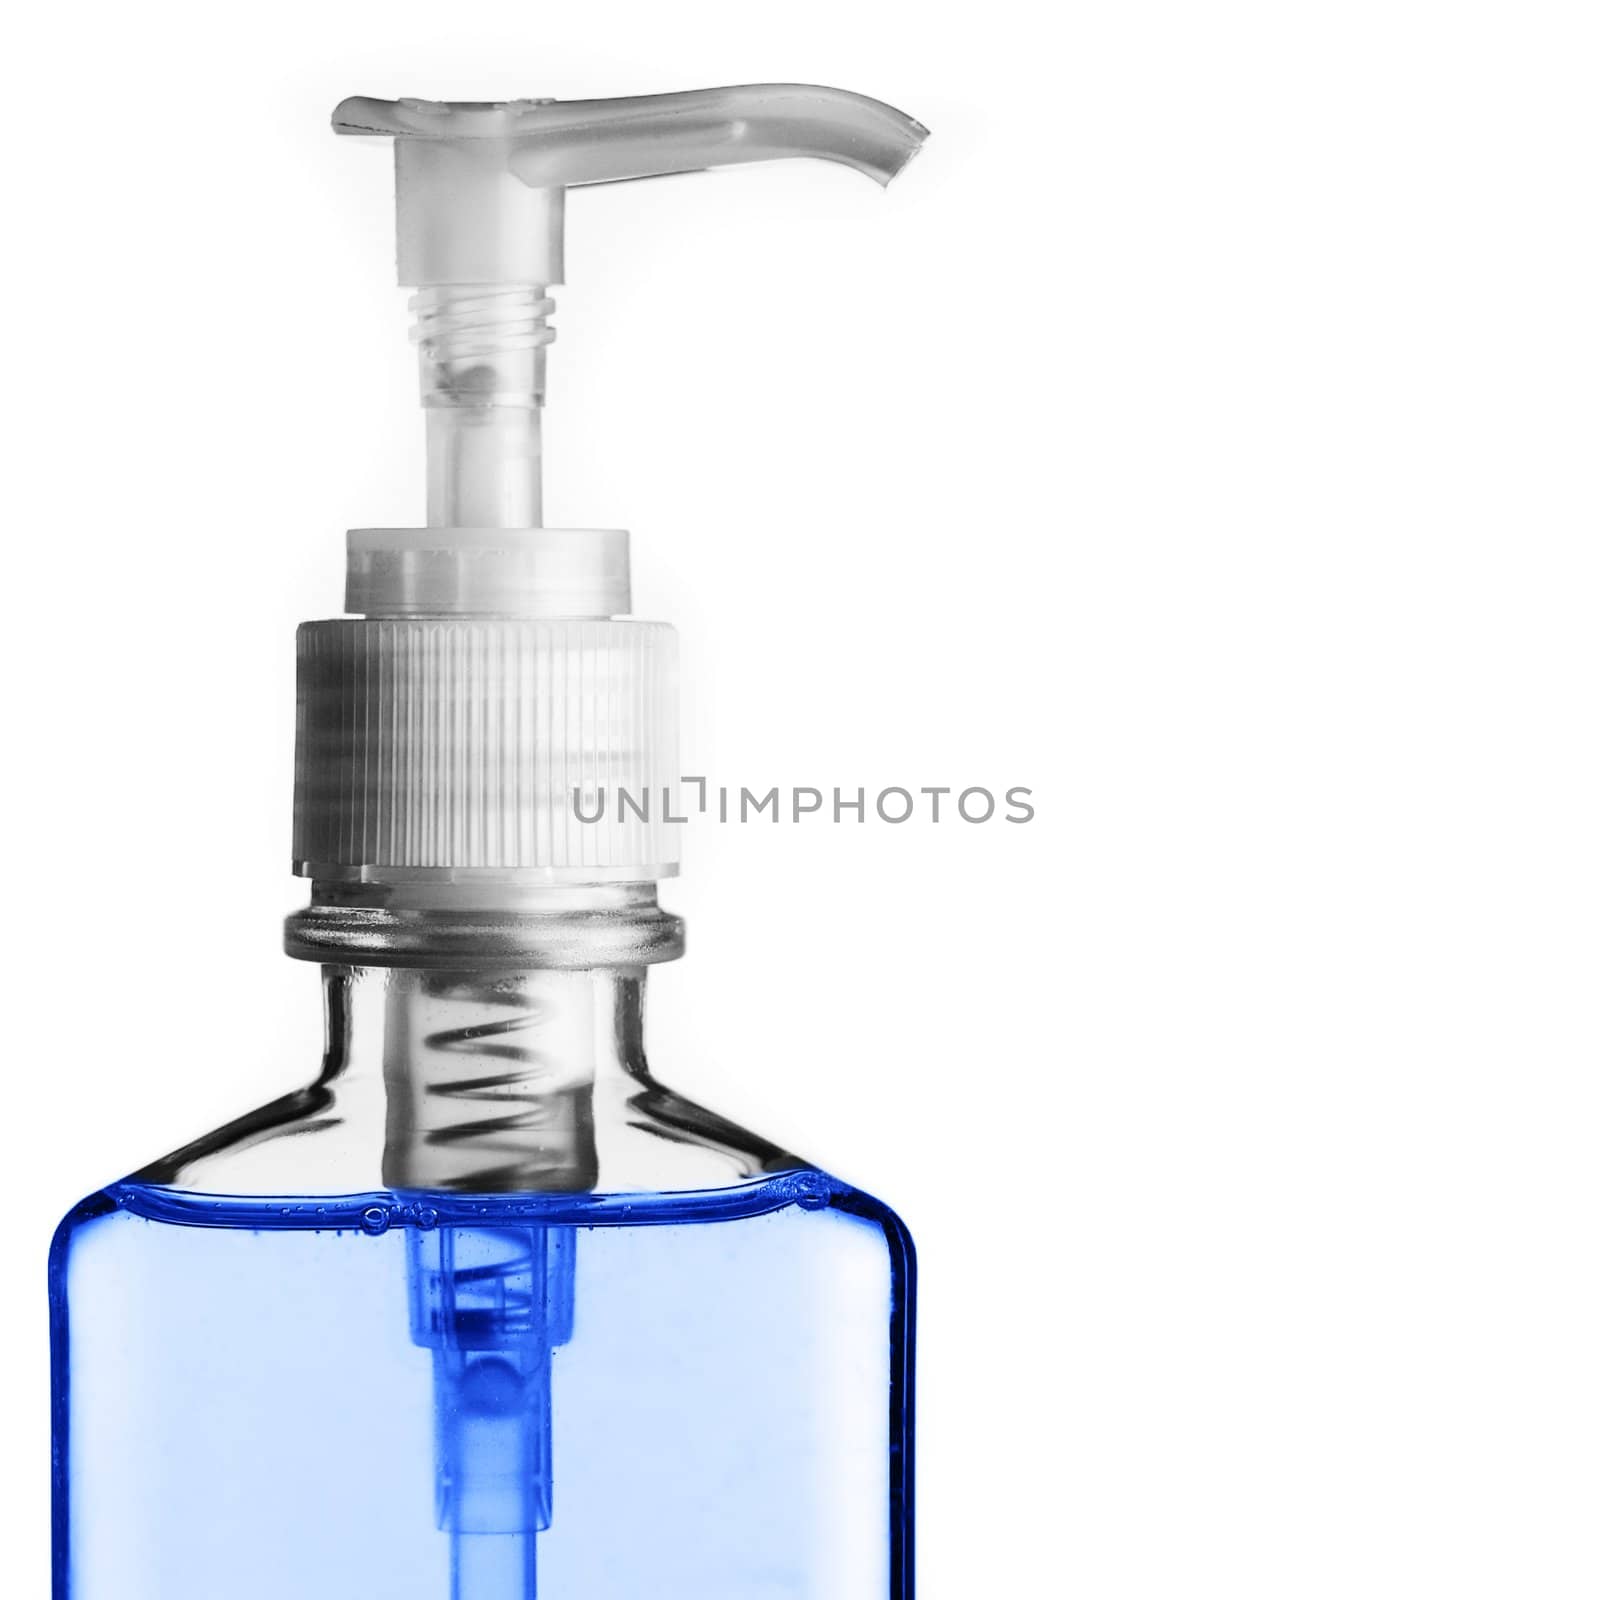 Blue pump bottles against a white background.